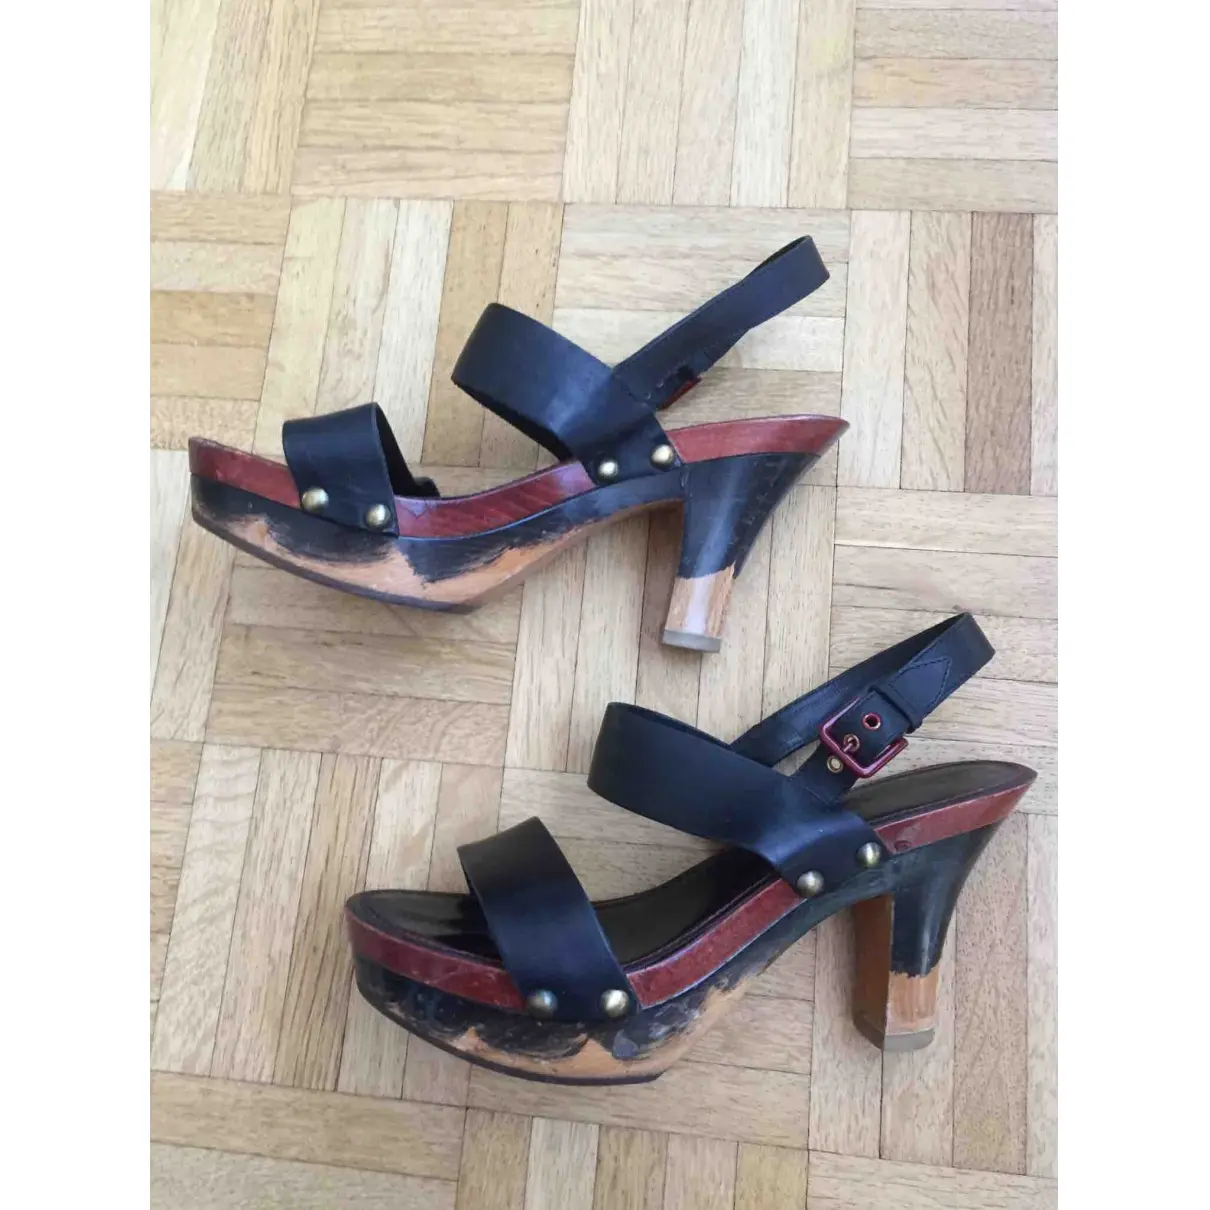 Yves Saint Laurent Leather sandals for sale - Vintage